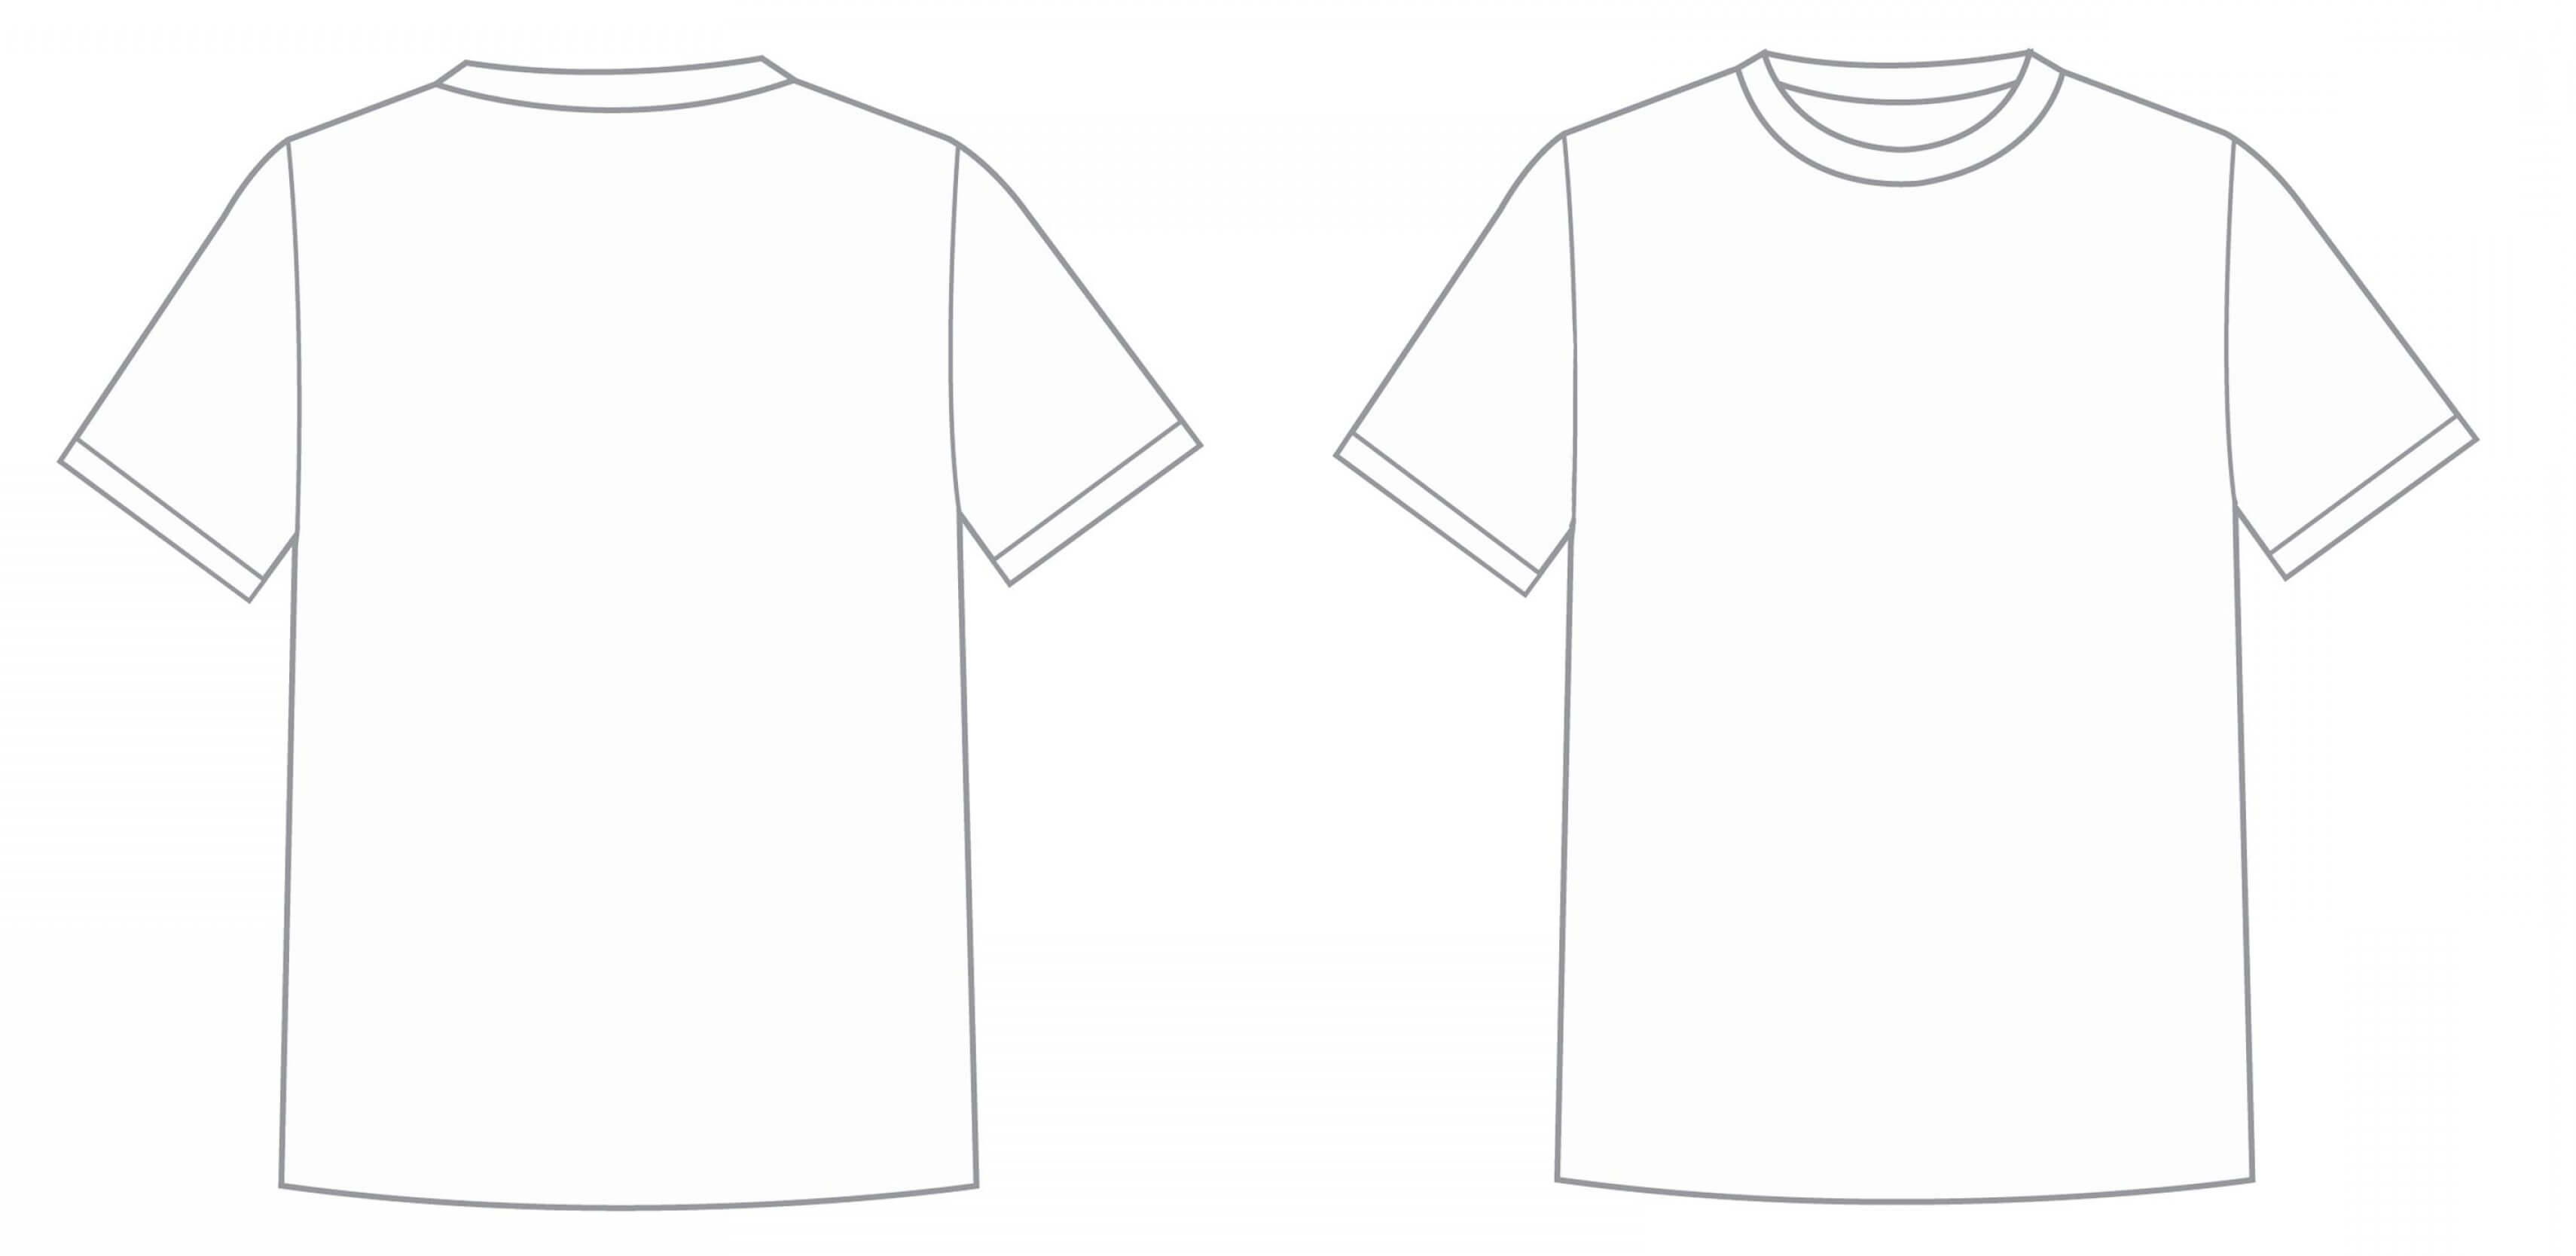 Blank Tee Shirt Template Luxury Blank T Shirt Outline Intended For Blank T Shirt Outline Template